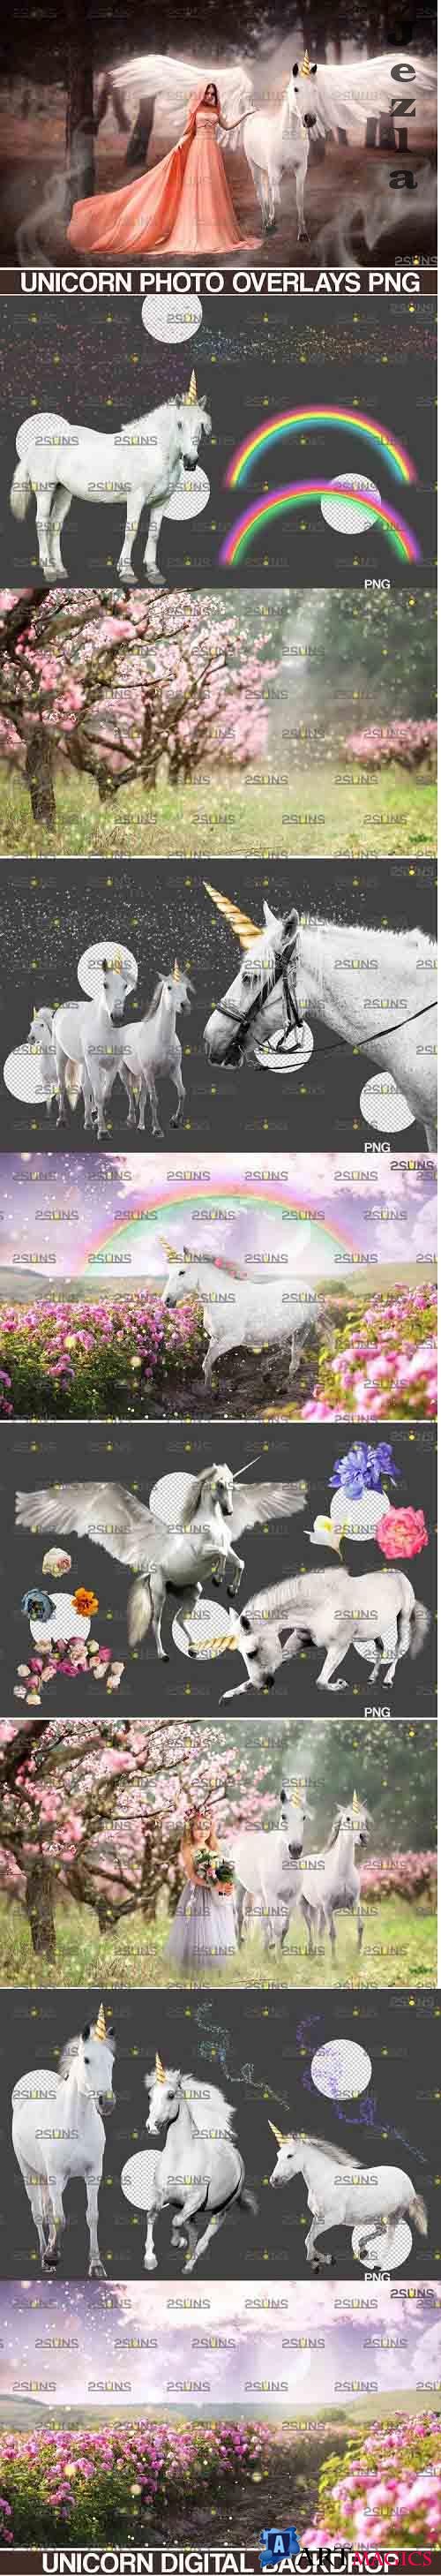 Unicorn overlay & Flower backdrop, White Horse png overlays - 738327